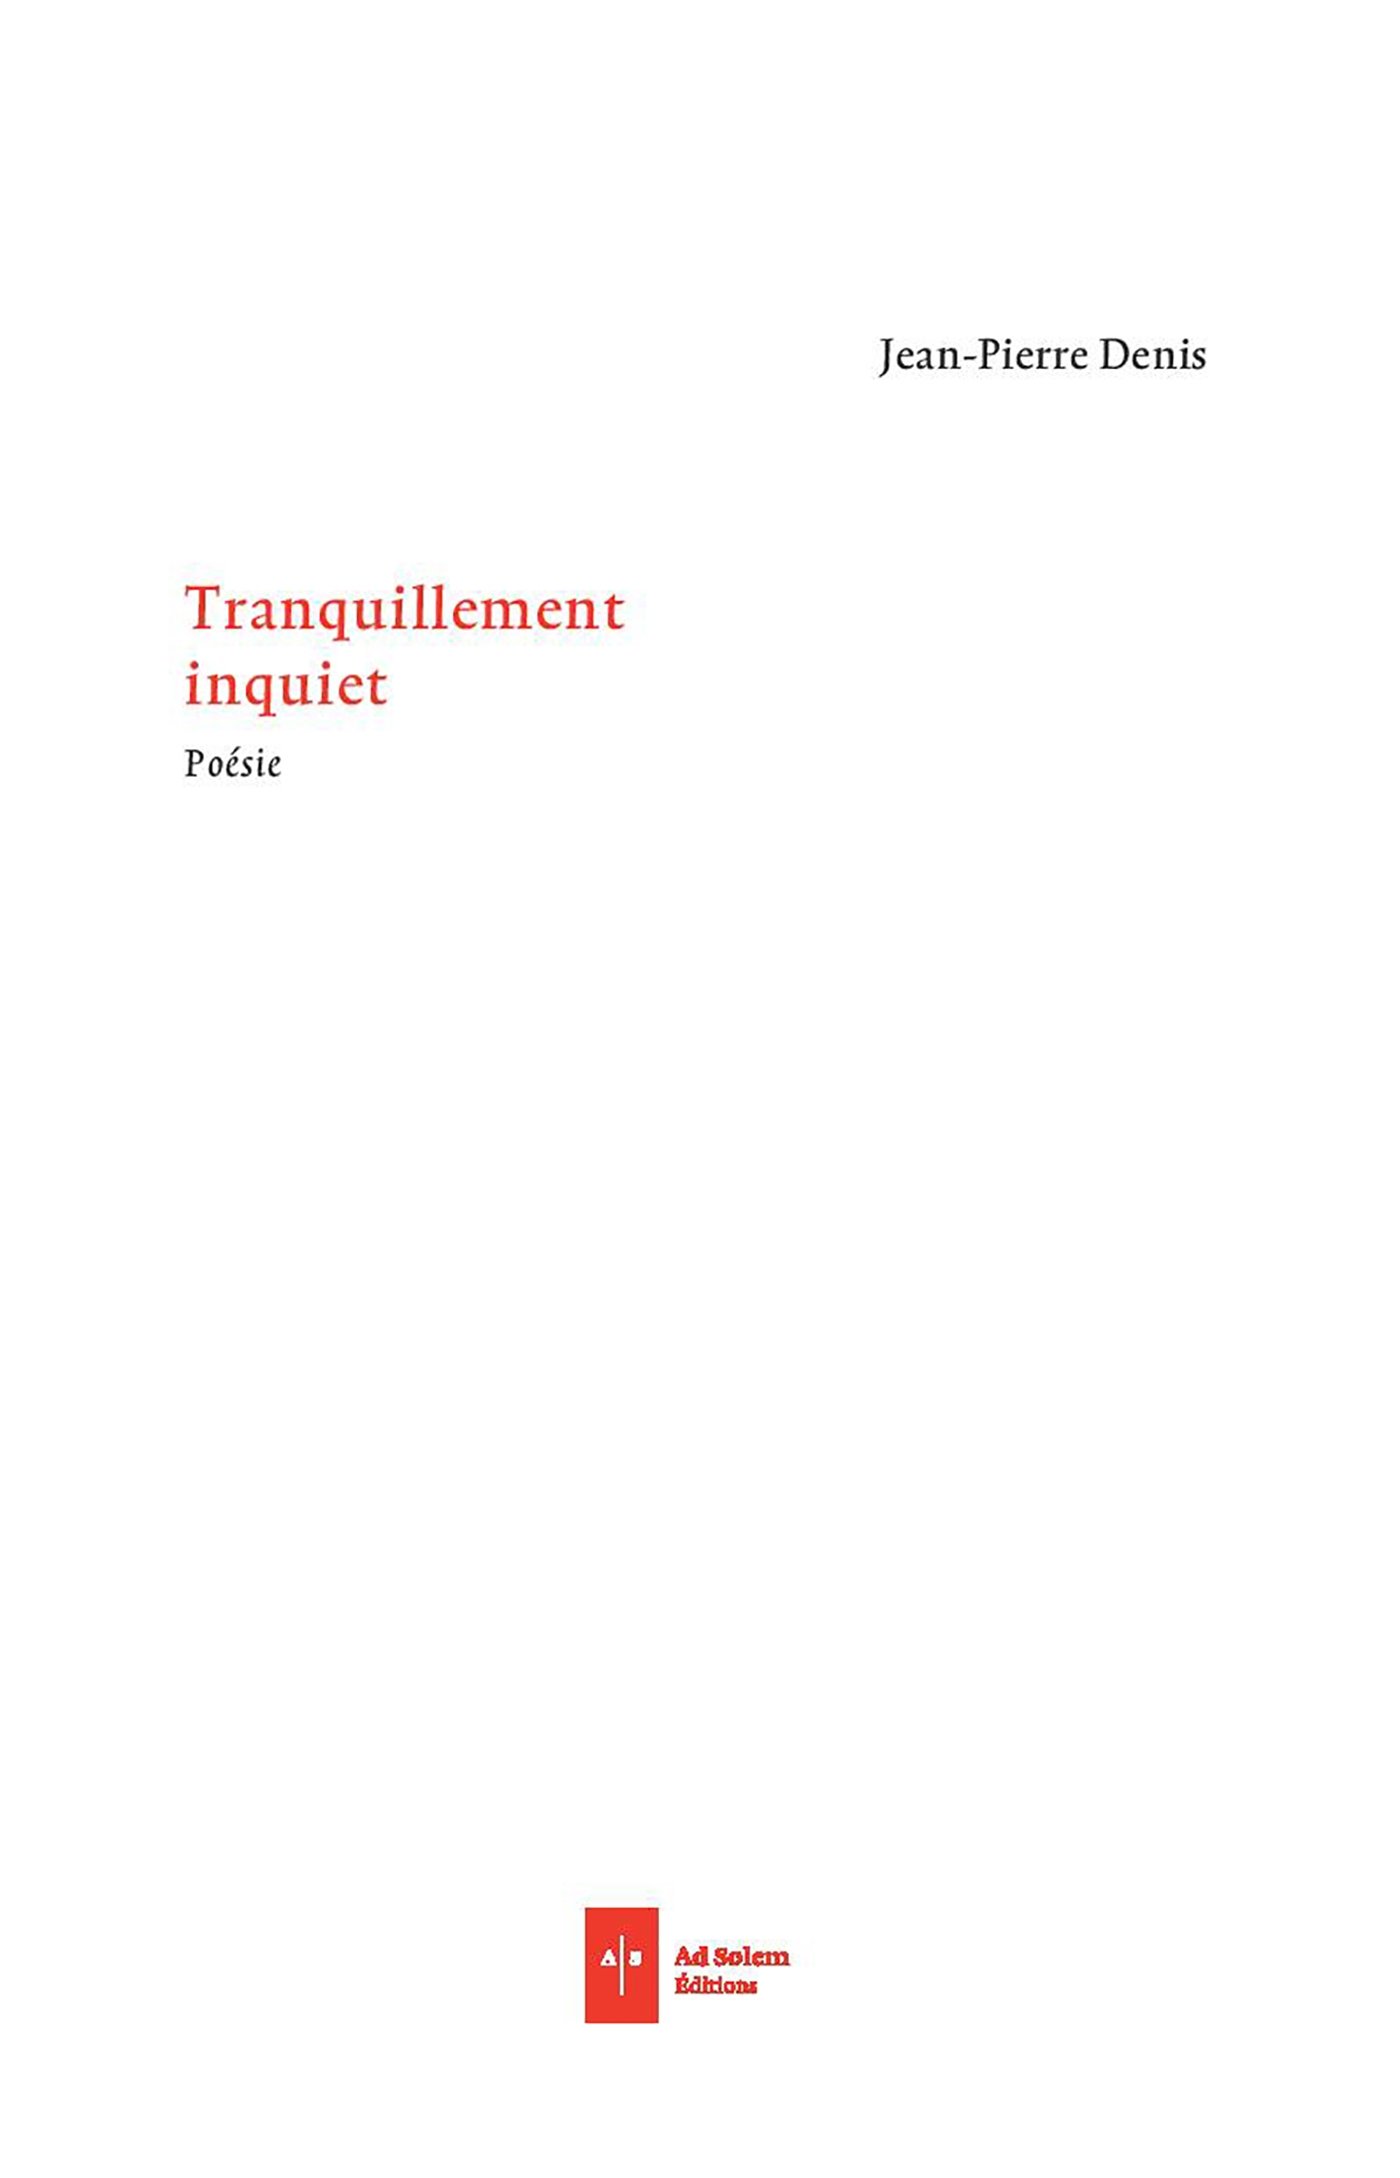 Tranquillement inquiet, Jean-Pierre Denis, Ad Solem, 141 pages, 18 euros.